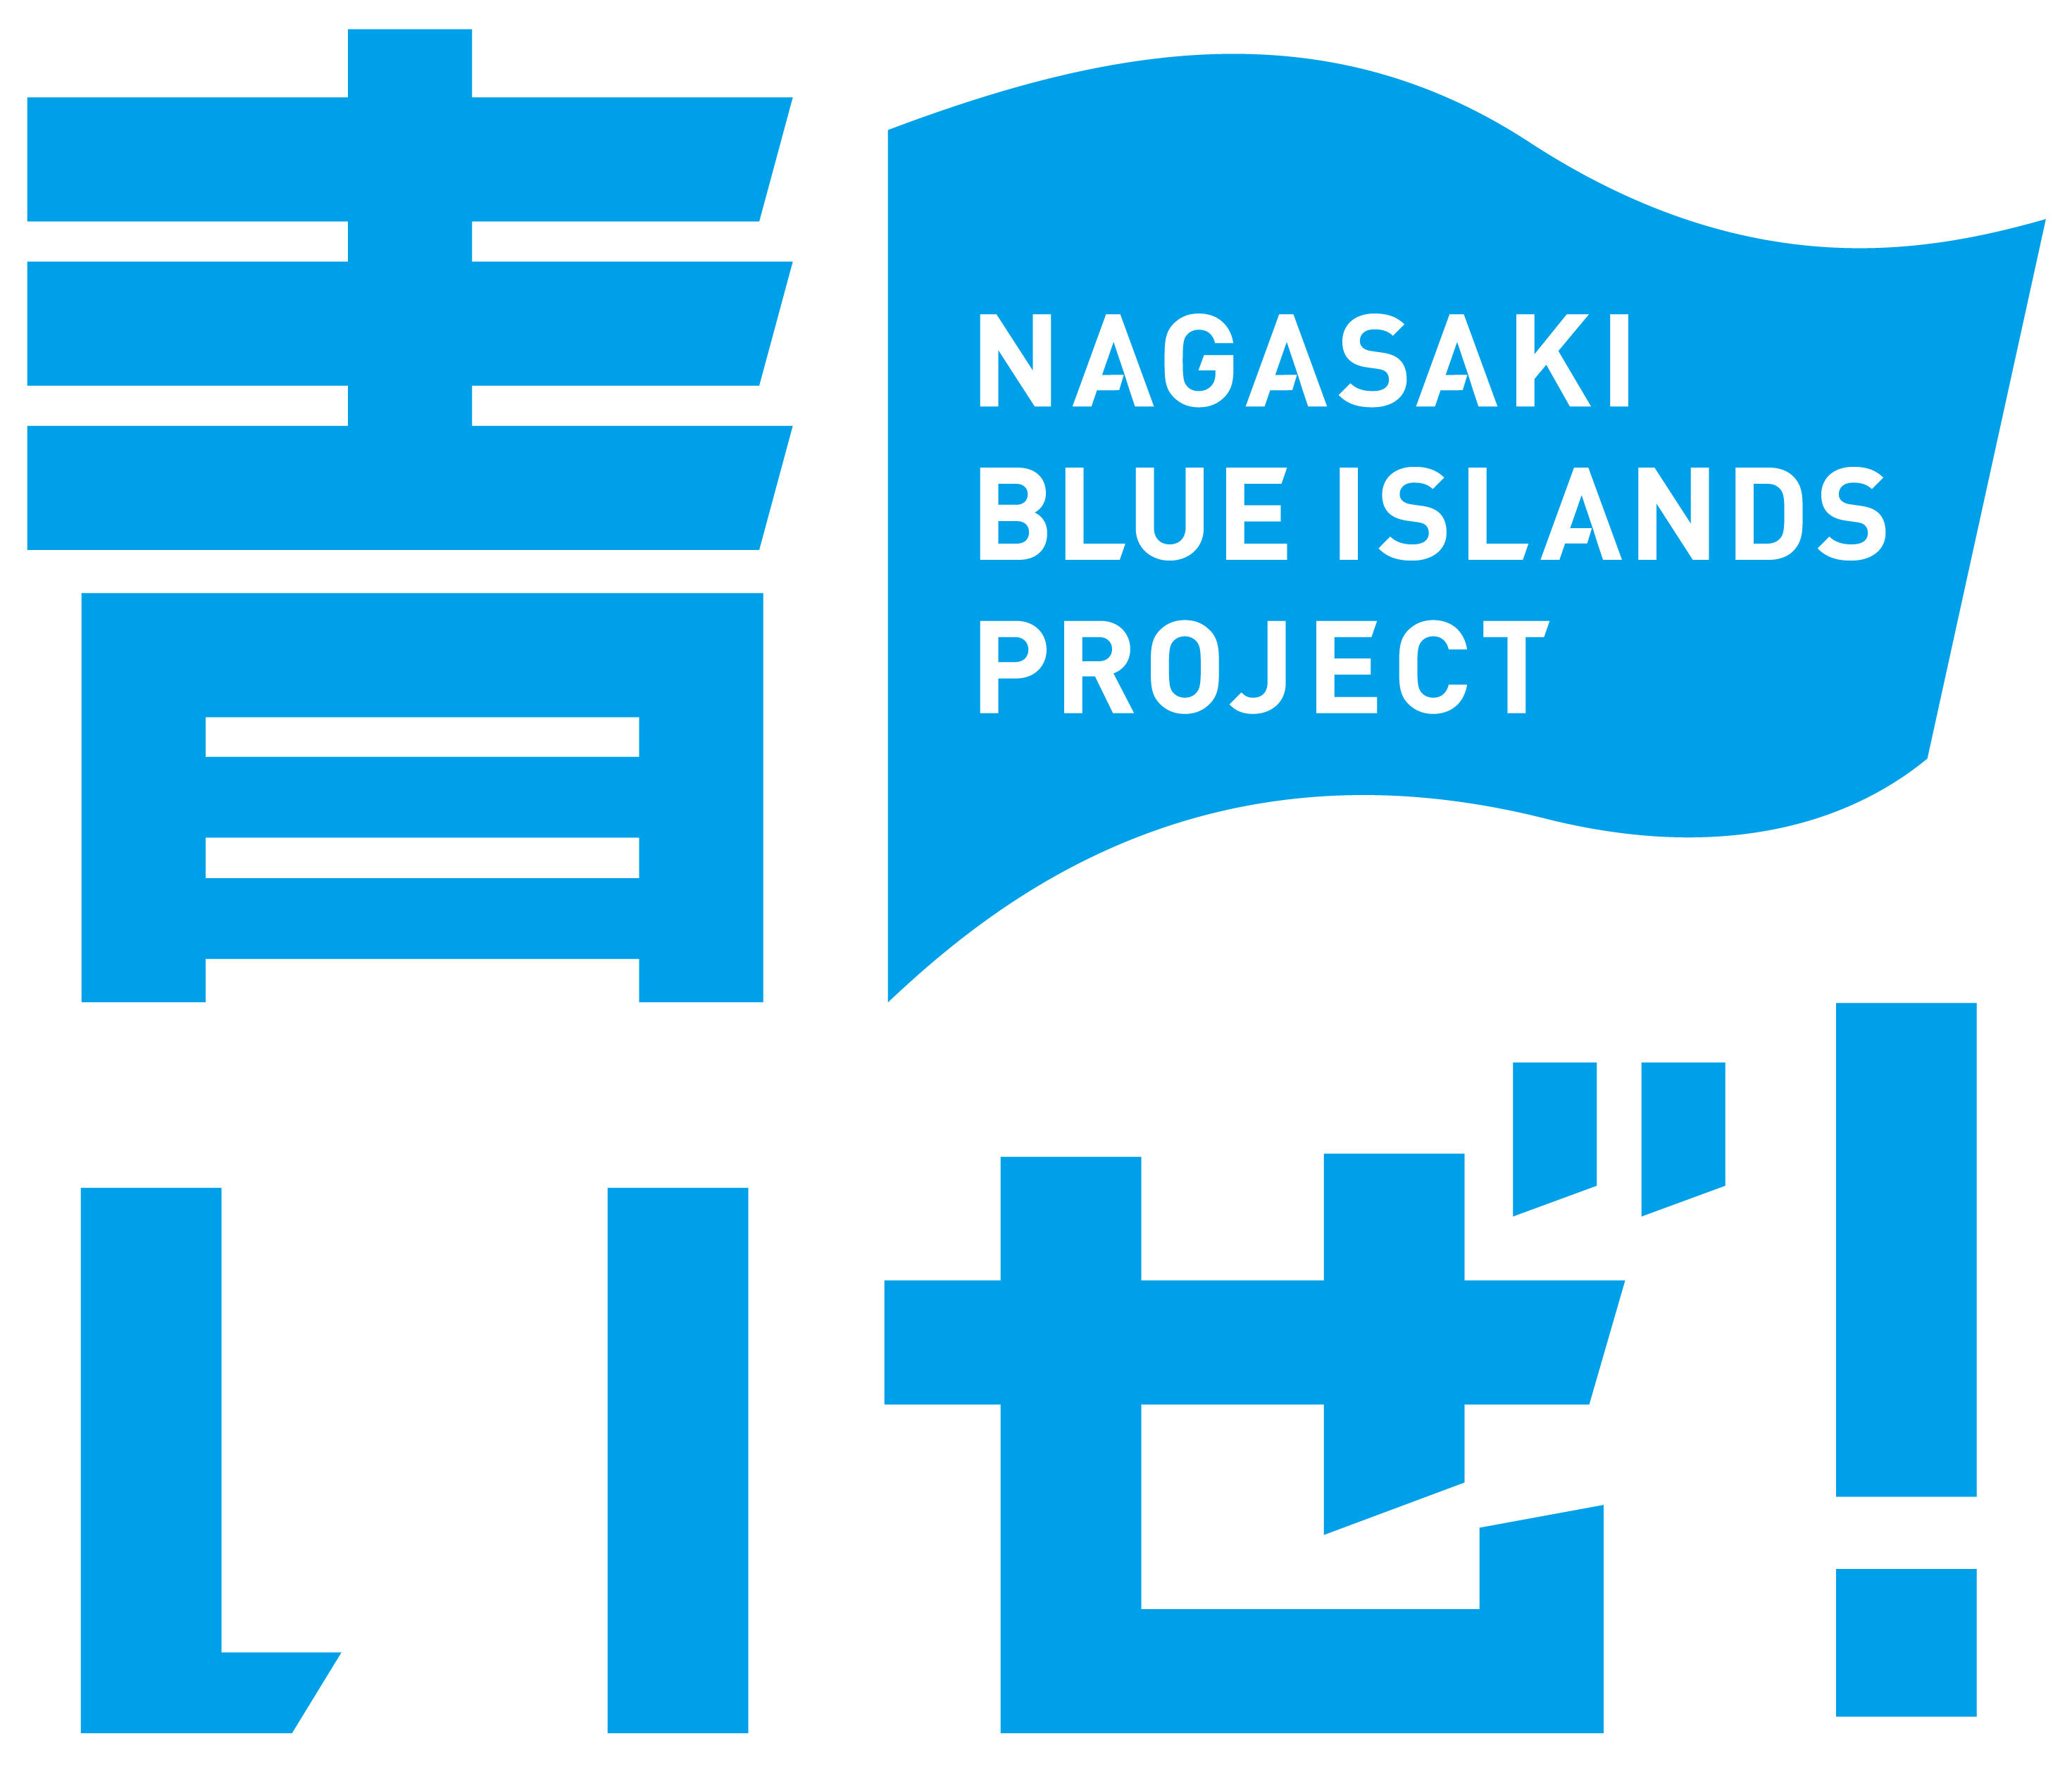 NAGASAKI BLUE ISLANDS PROJECT